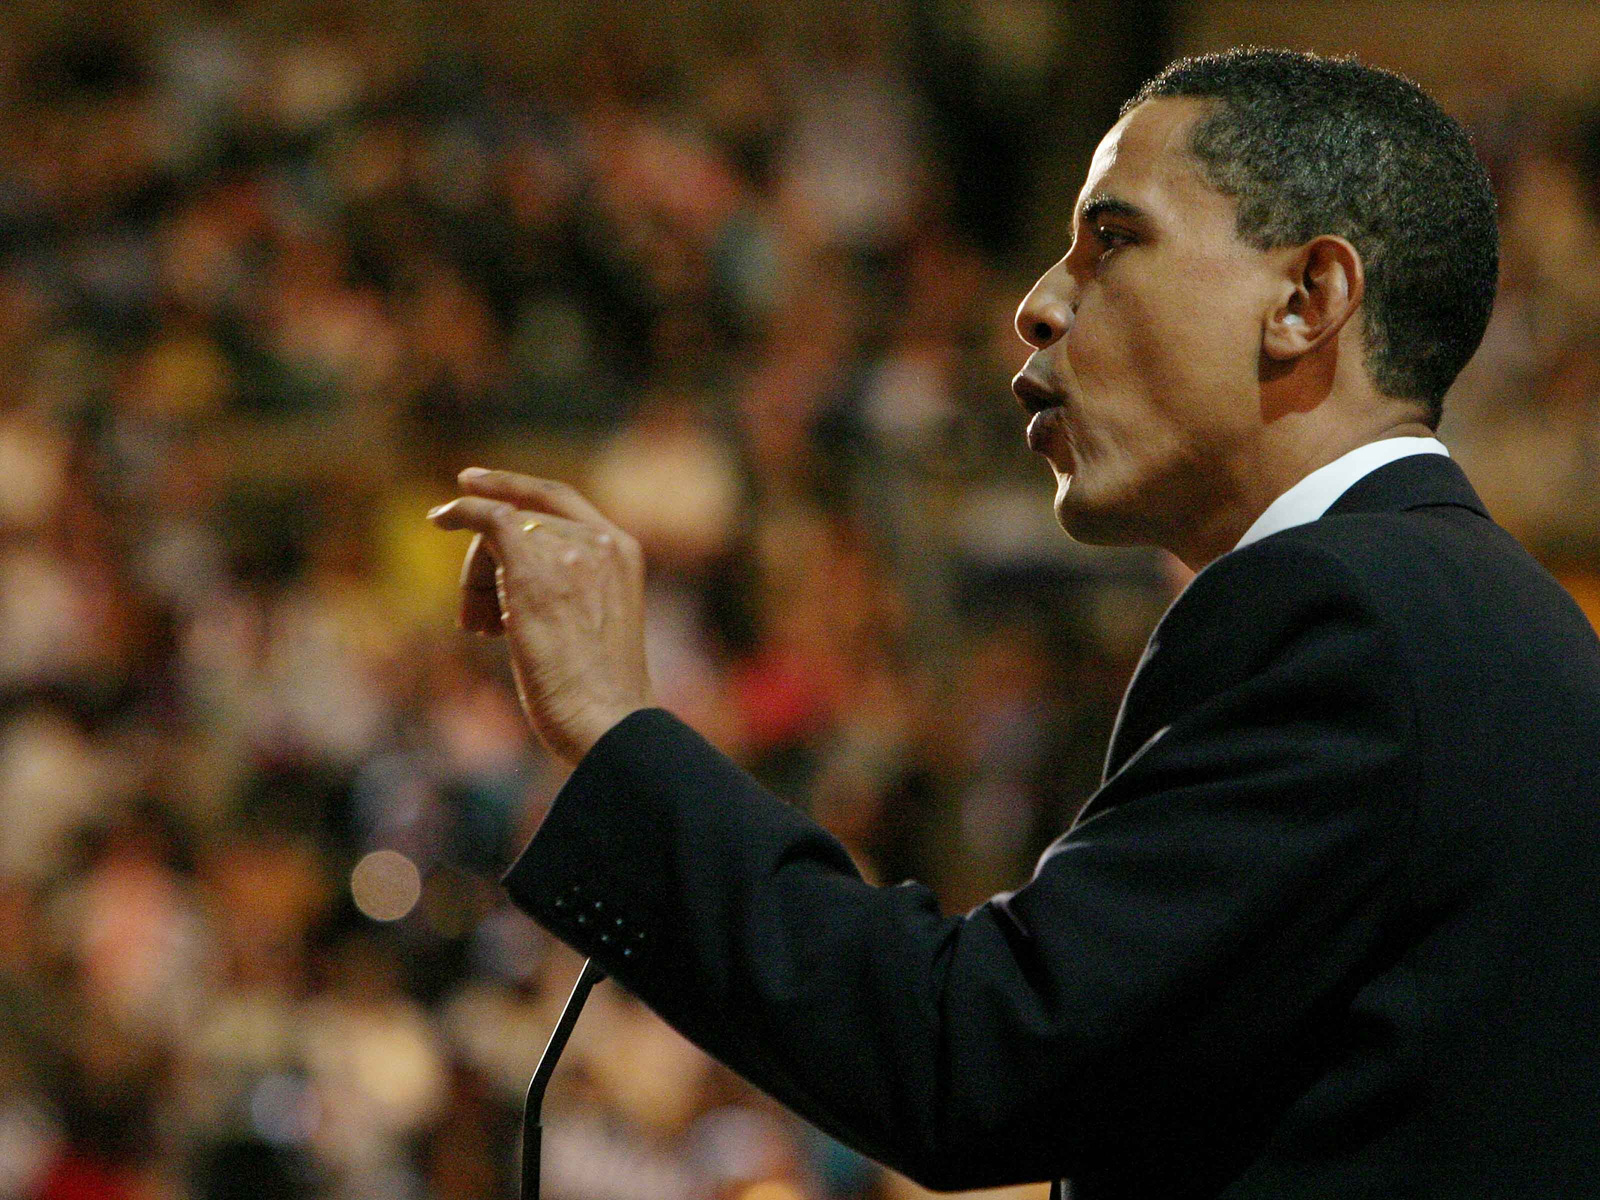 Barack Obama - Command People , HD Wallpaper & Backgrounds